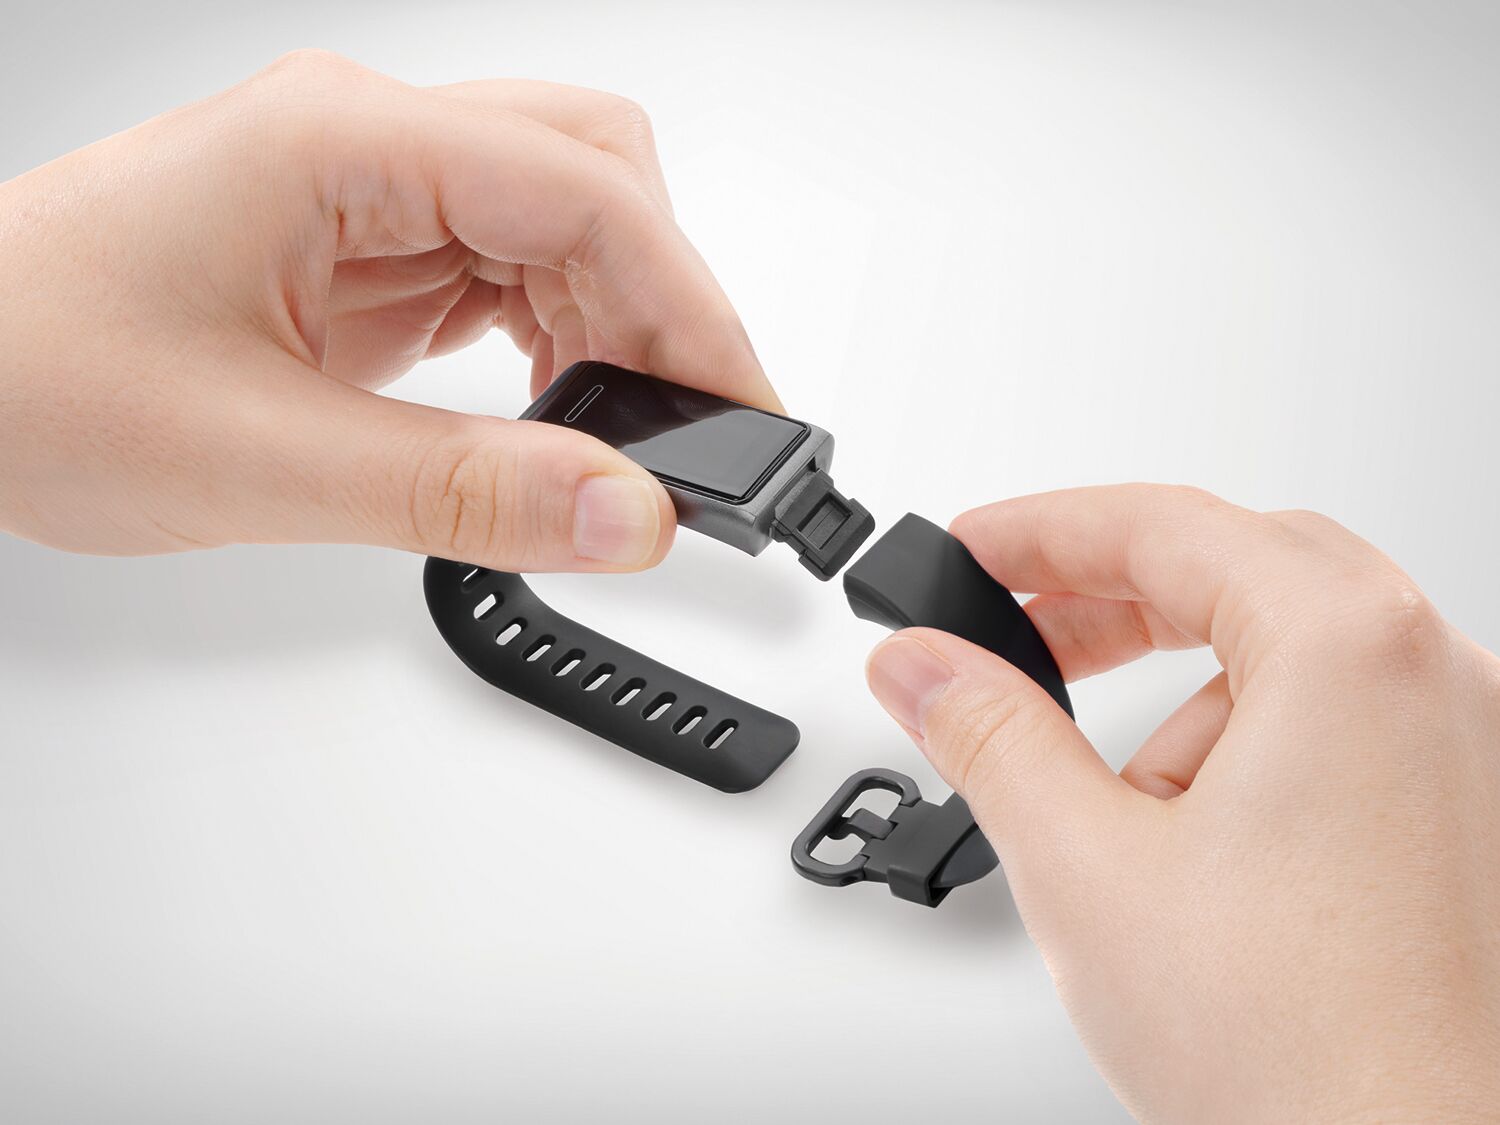 Actividad sensor silvercrest sas 82 p.m fitnesstracker actividades cuchillo nuevo embalaje original 